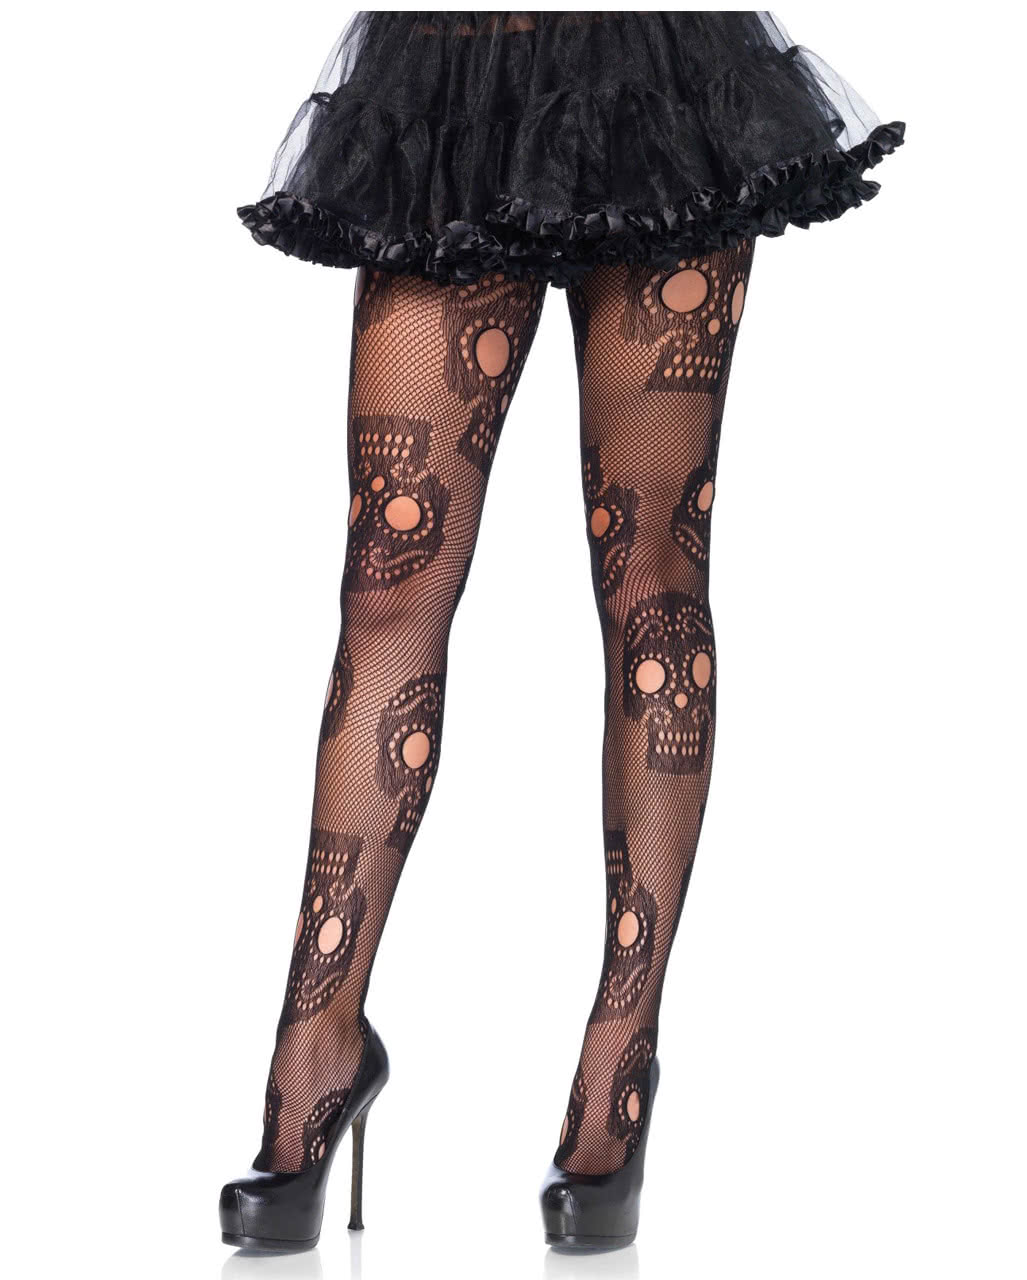 Gothic Rockabilly Skull Fishnet Stockings Halloween Costume Tights Stockings